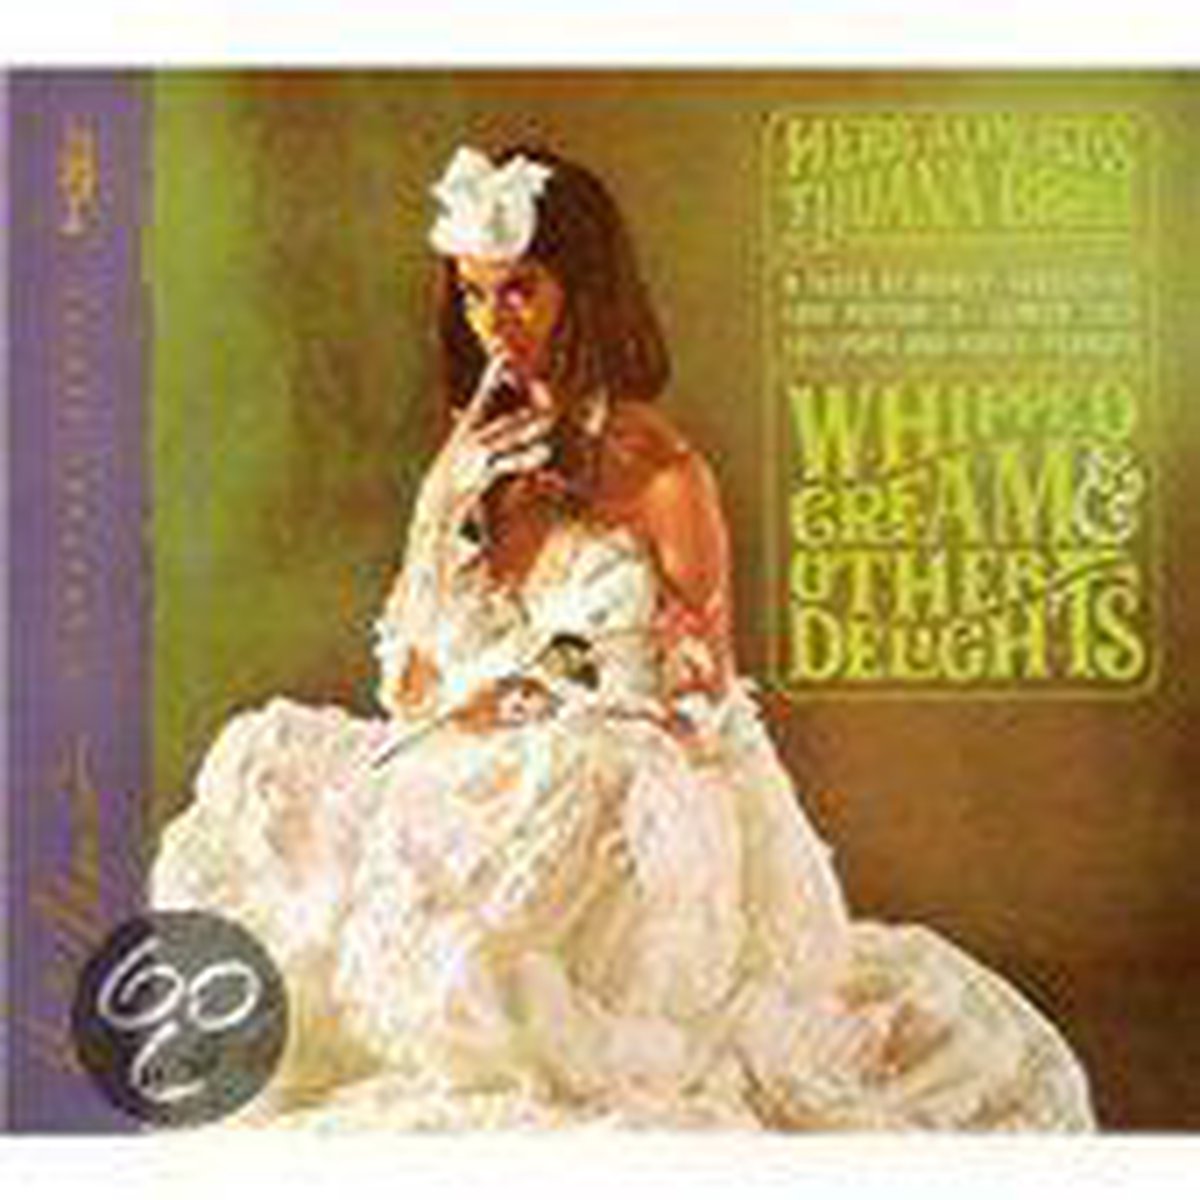 Whipped Cream & Other Delights - Herb Alpert's & the Tijuana Brass